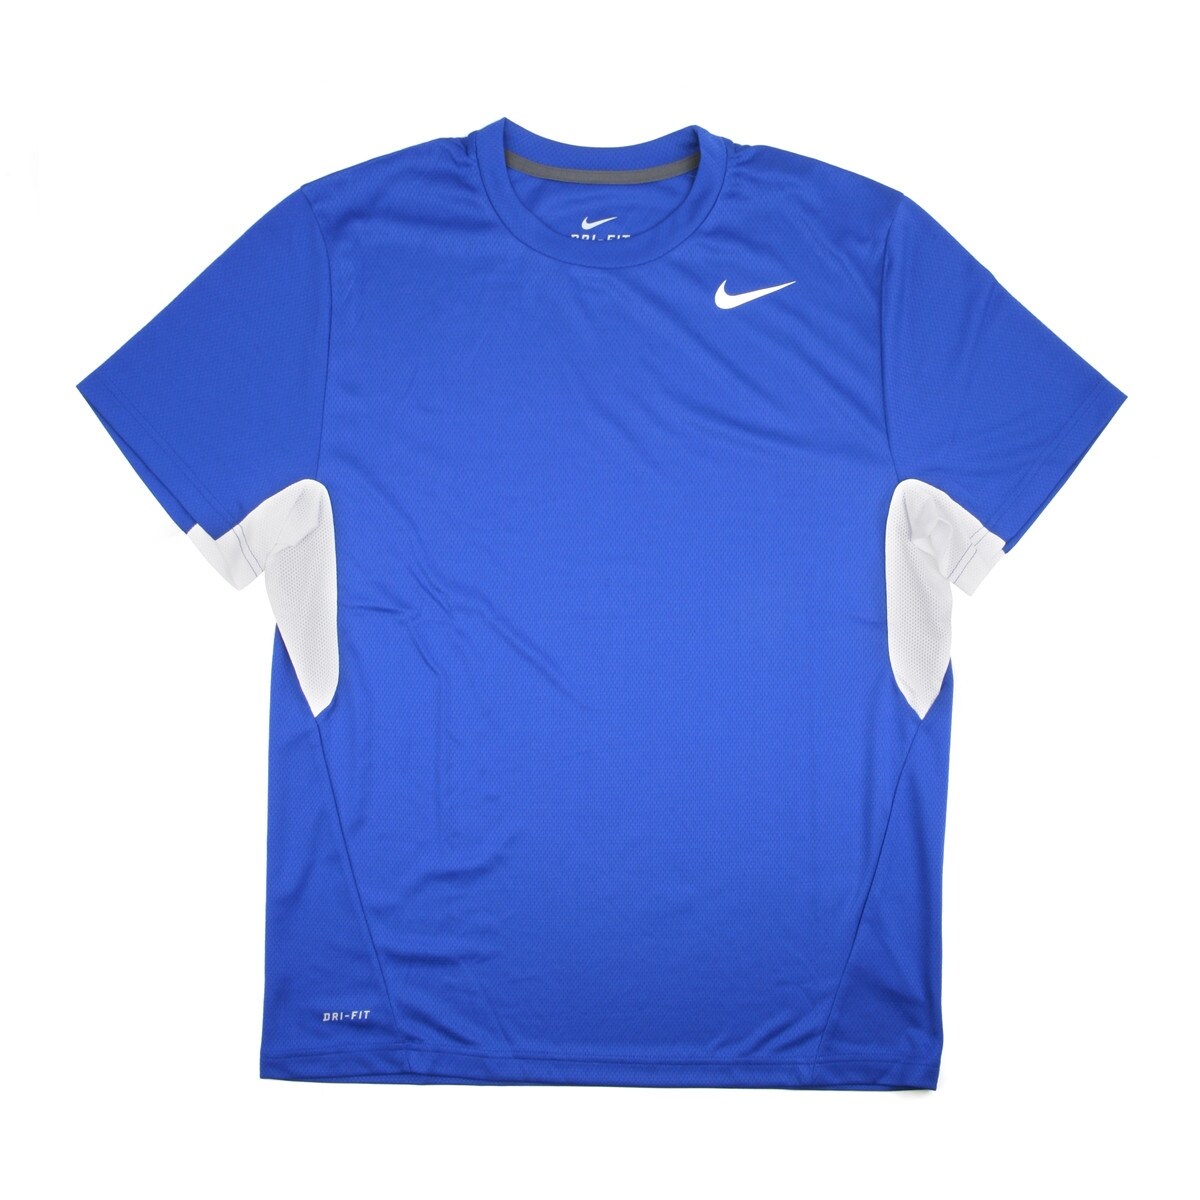 Shop Nike Men's Vapor Blue/White Dri-FIT Tee Shirt - Medium - Free ...